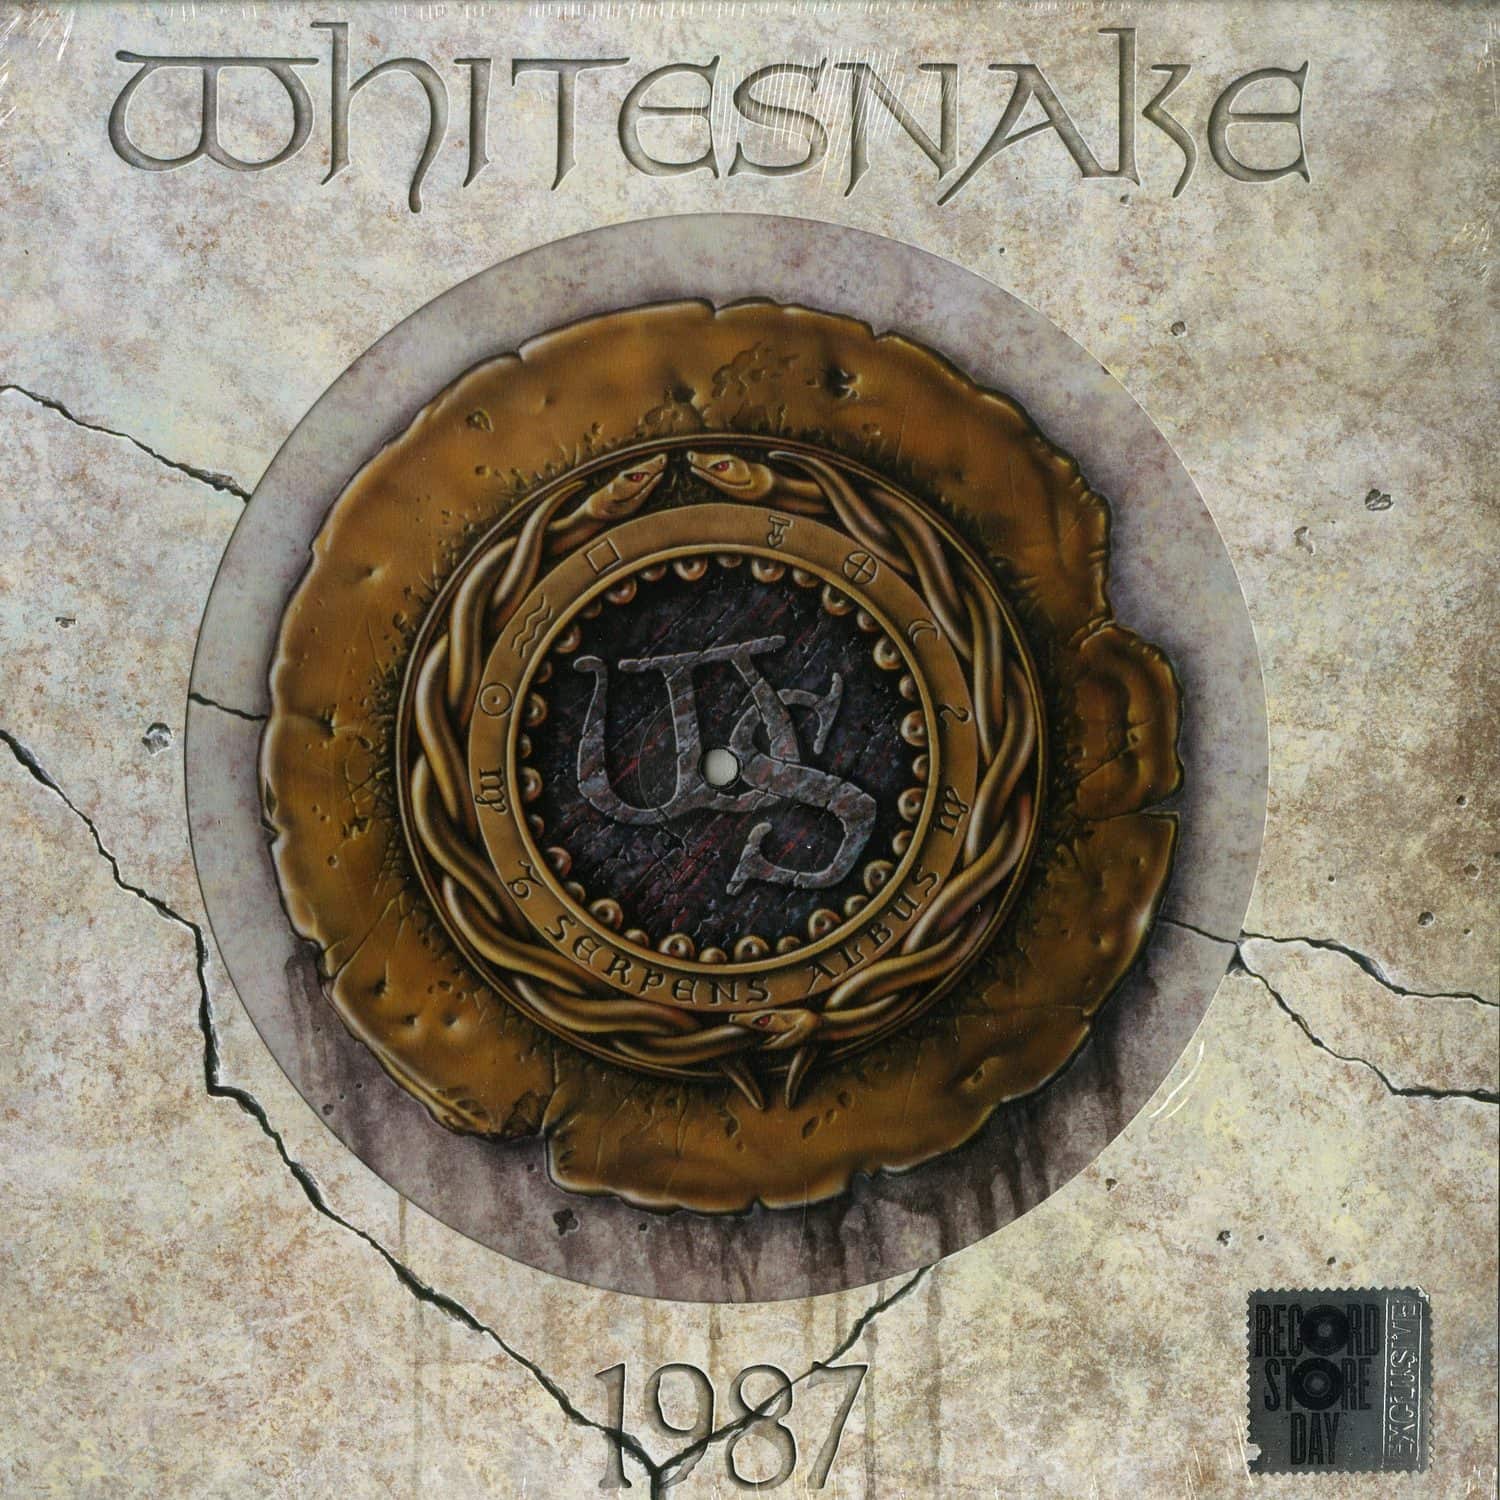 Whitesnake - 1987 - 30TH ANNIVERSARY EDITION 